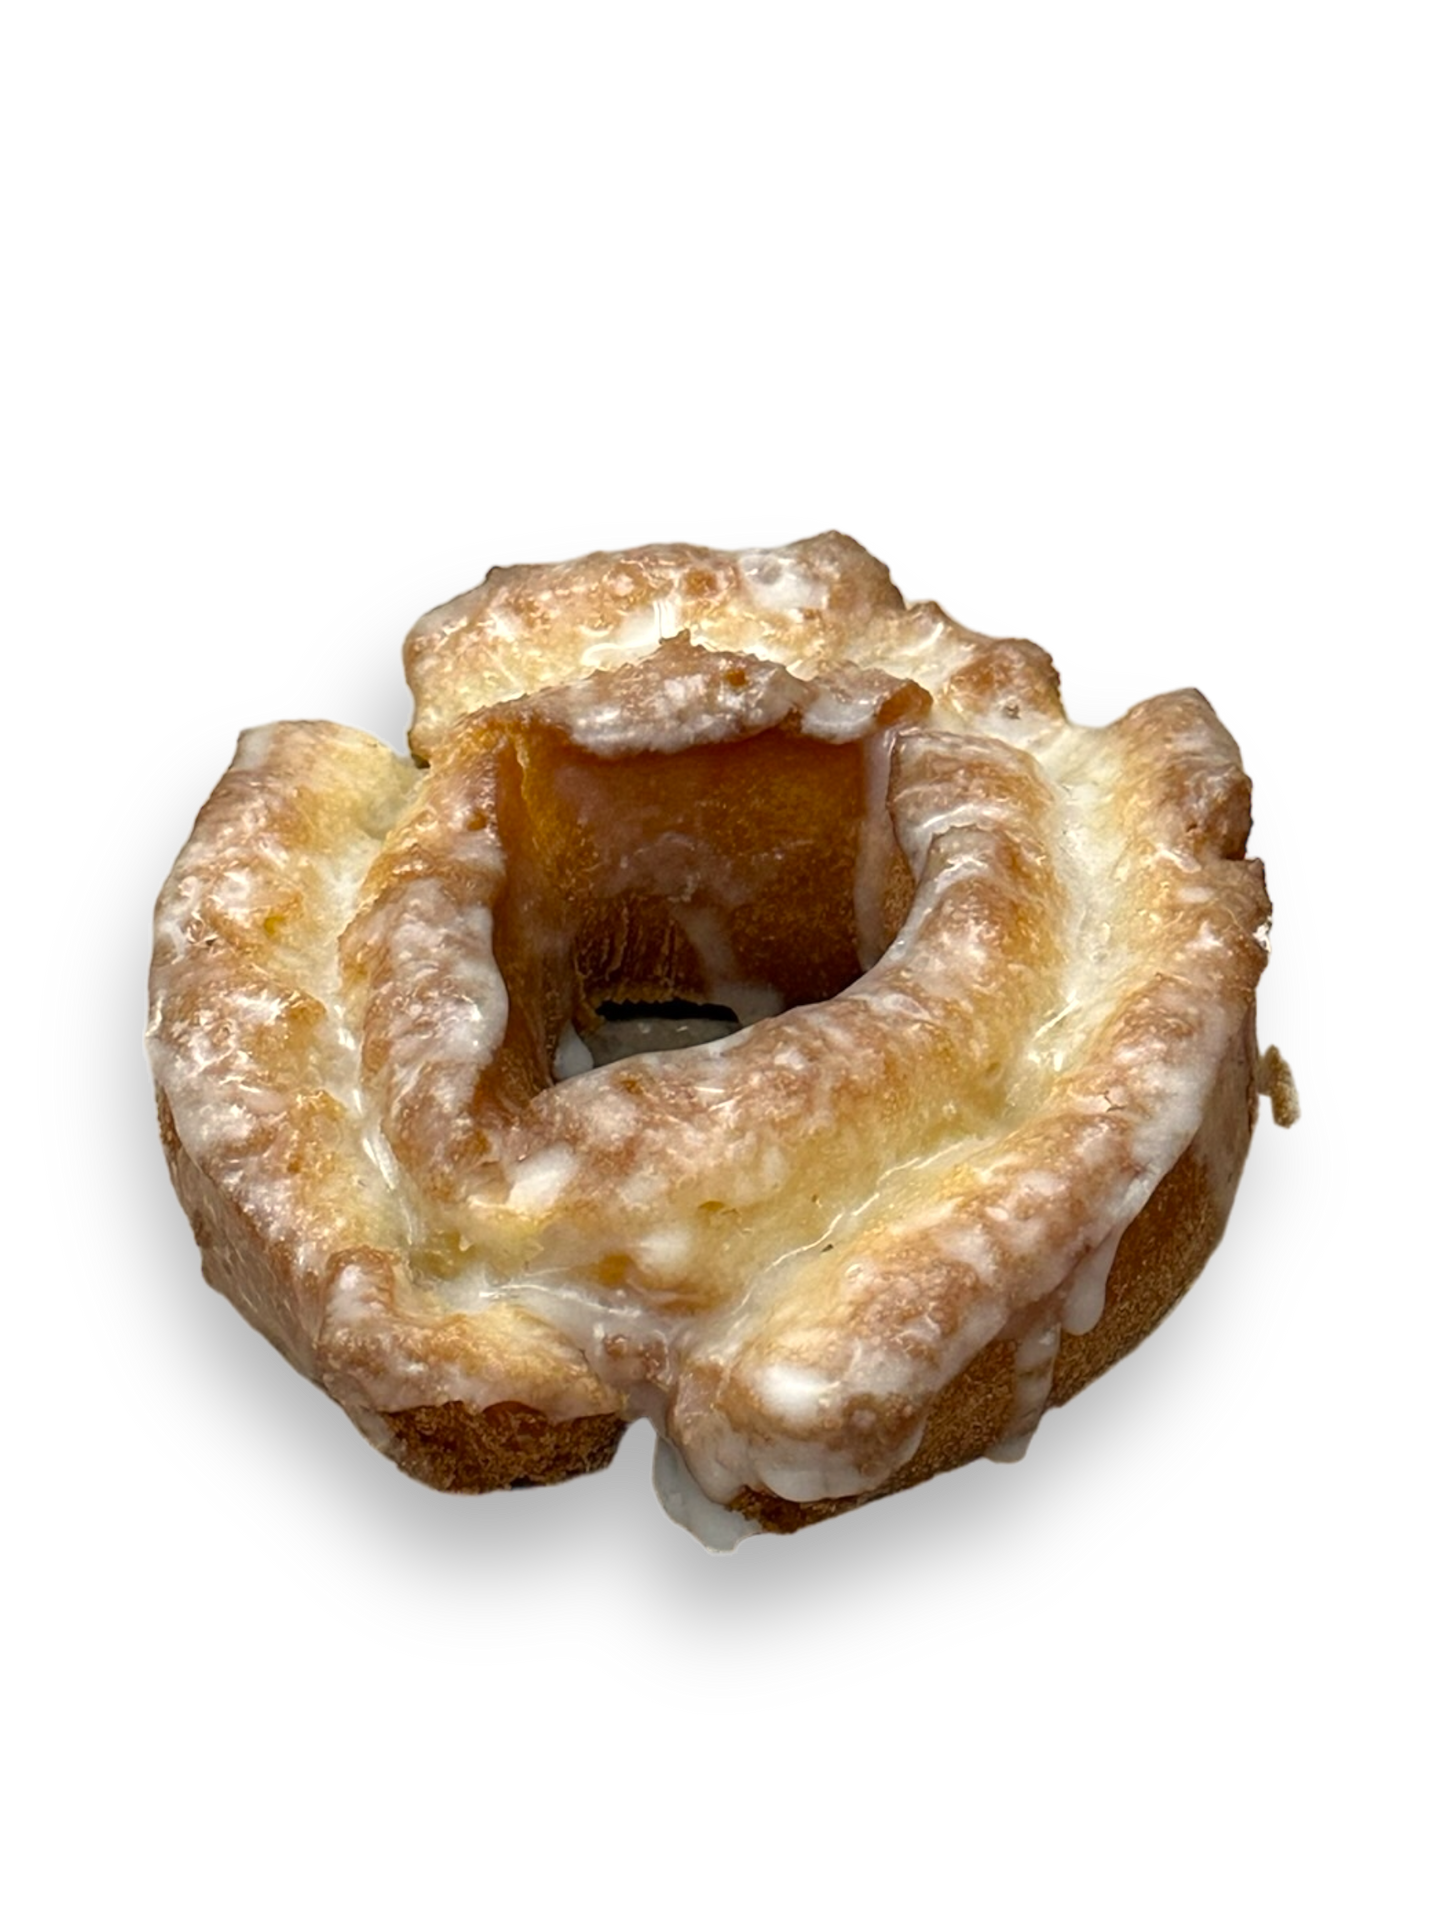 Glazed Old Fashioned Donut